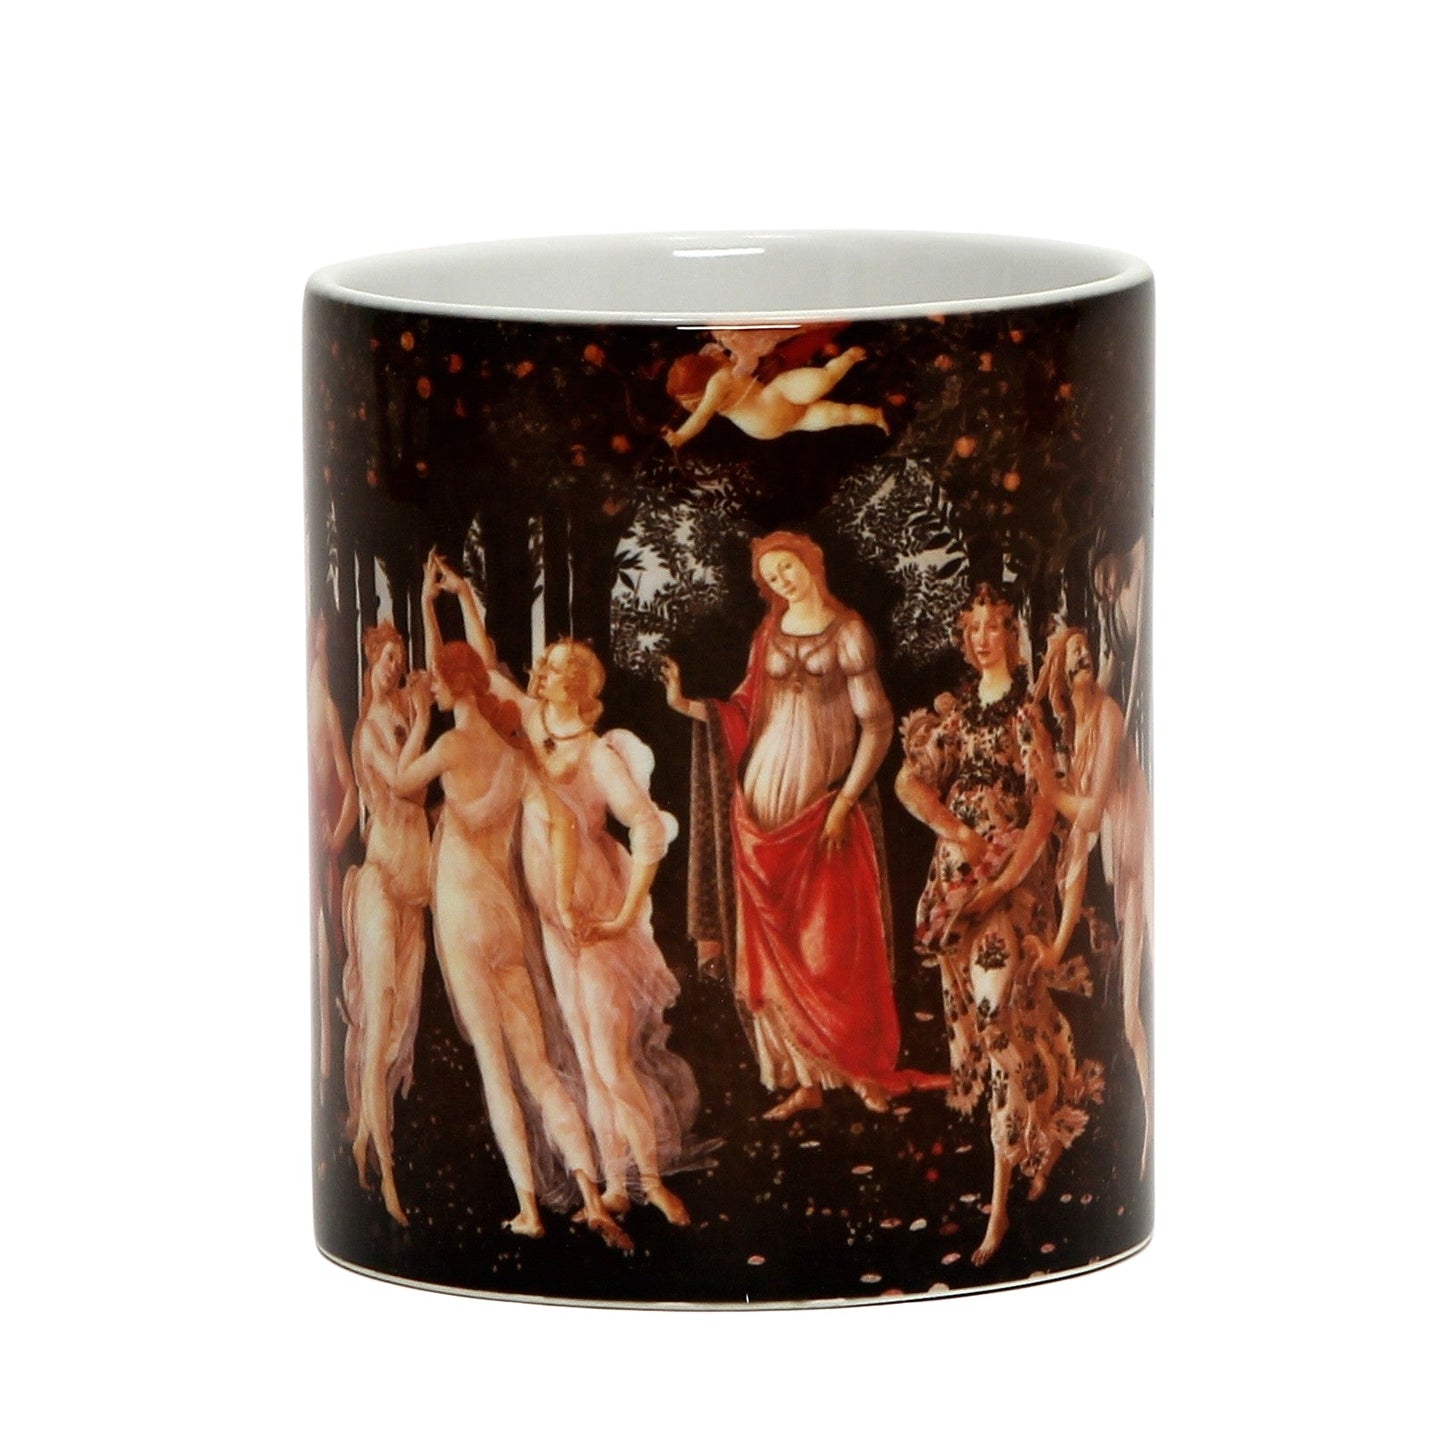 SUBLIMART: Affresco Mug - "Primavera" by Sandro Botticelli